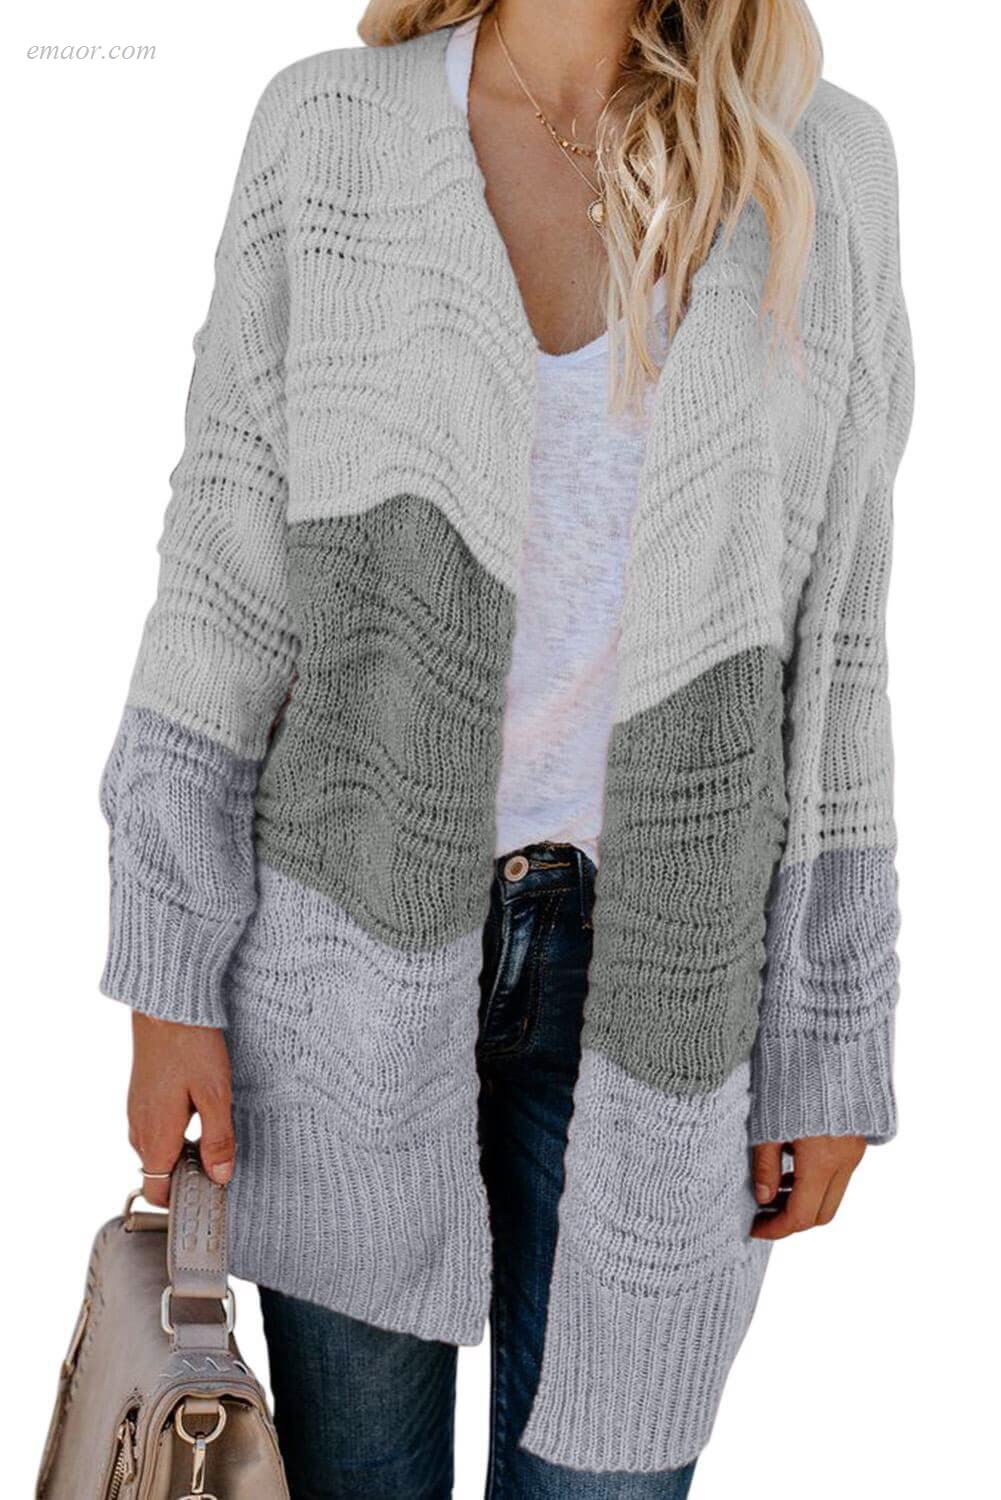 Long Outerwear Winter Women's Designer Walmart Ladies Outerwear Colorblock Knit Cardigan